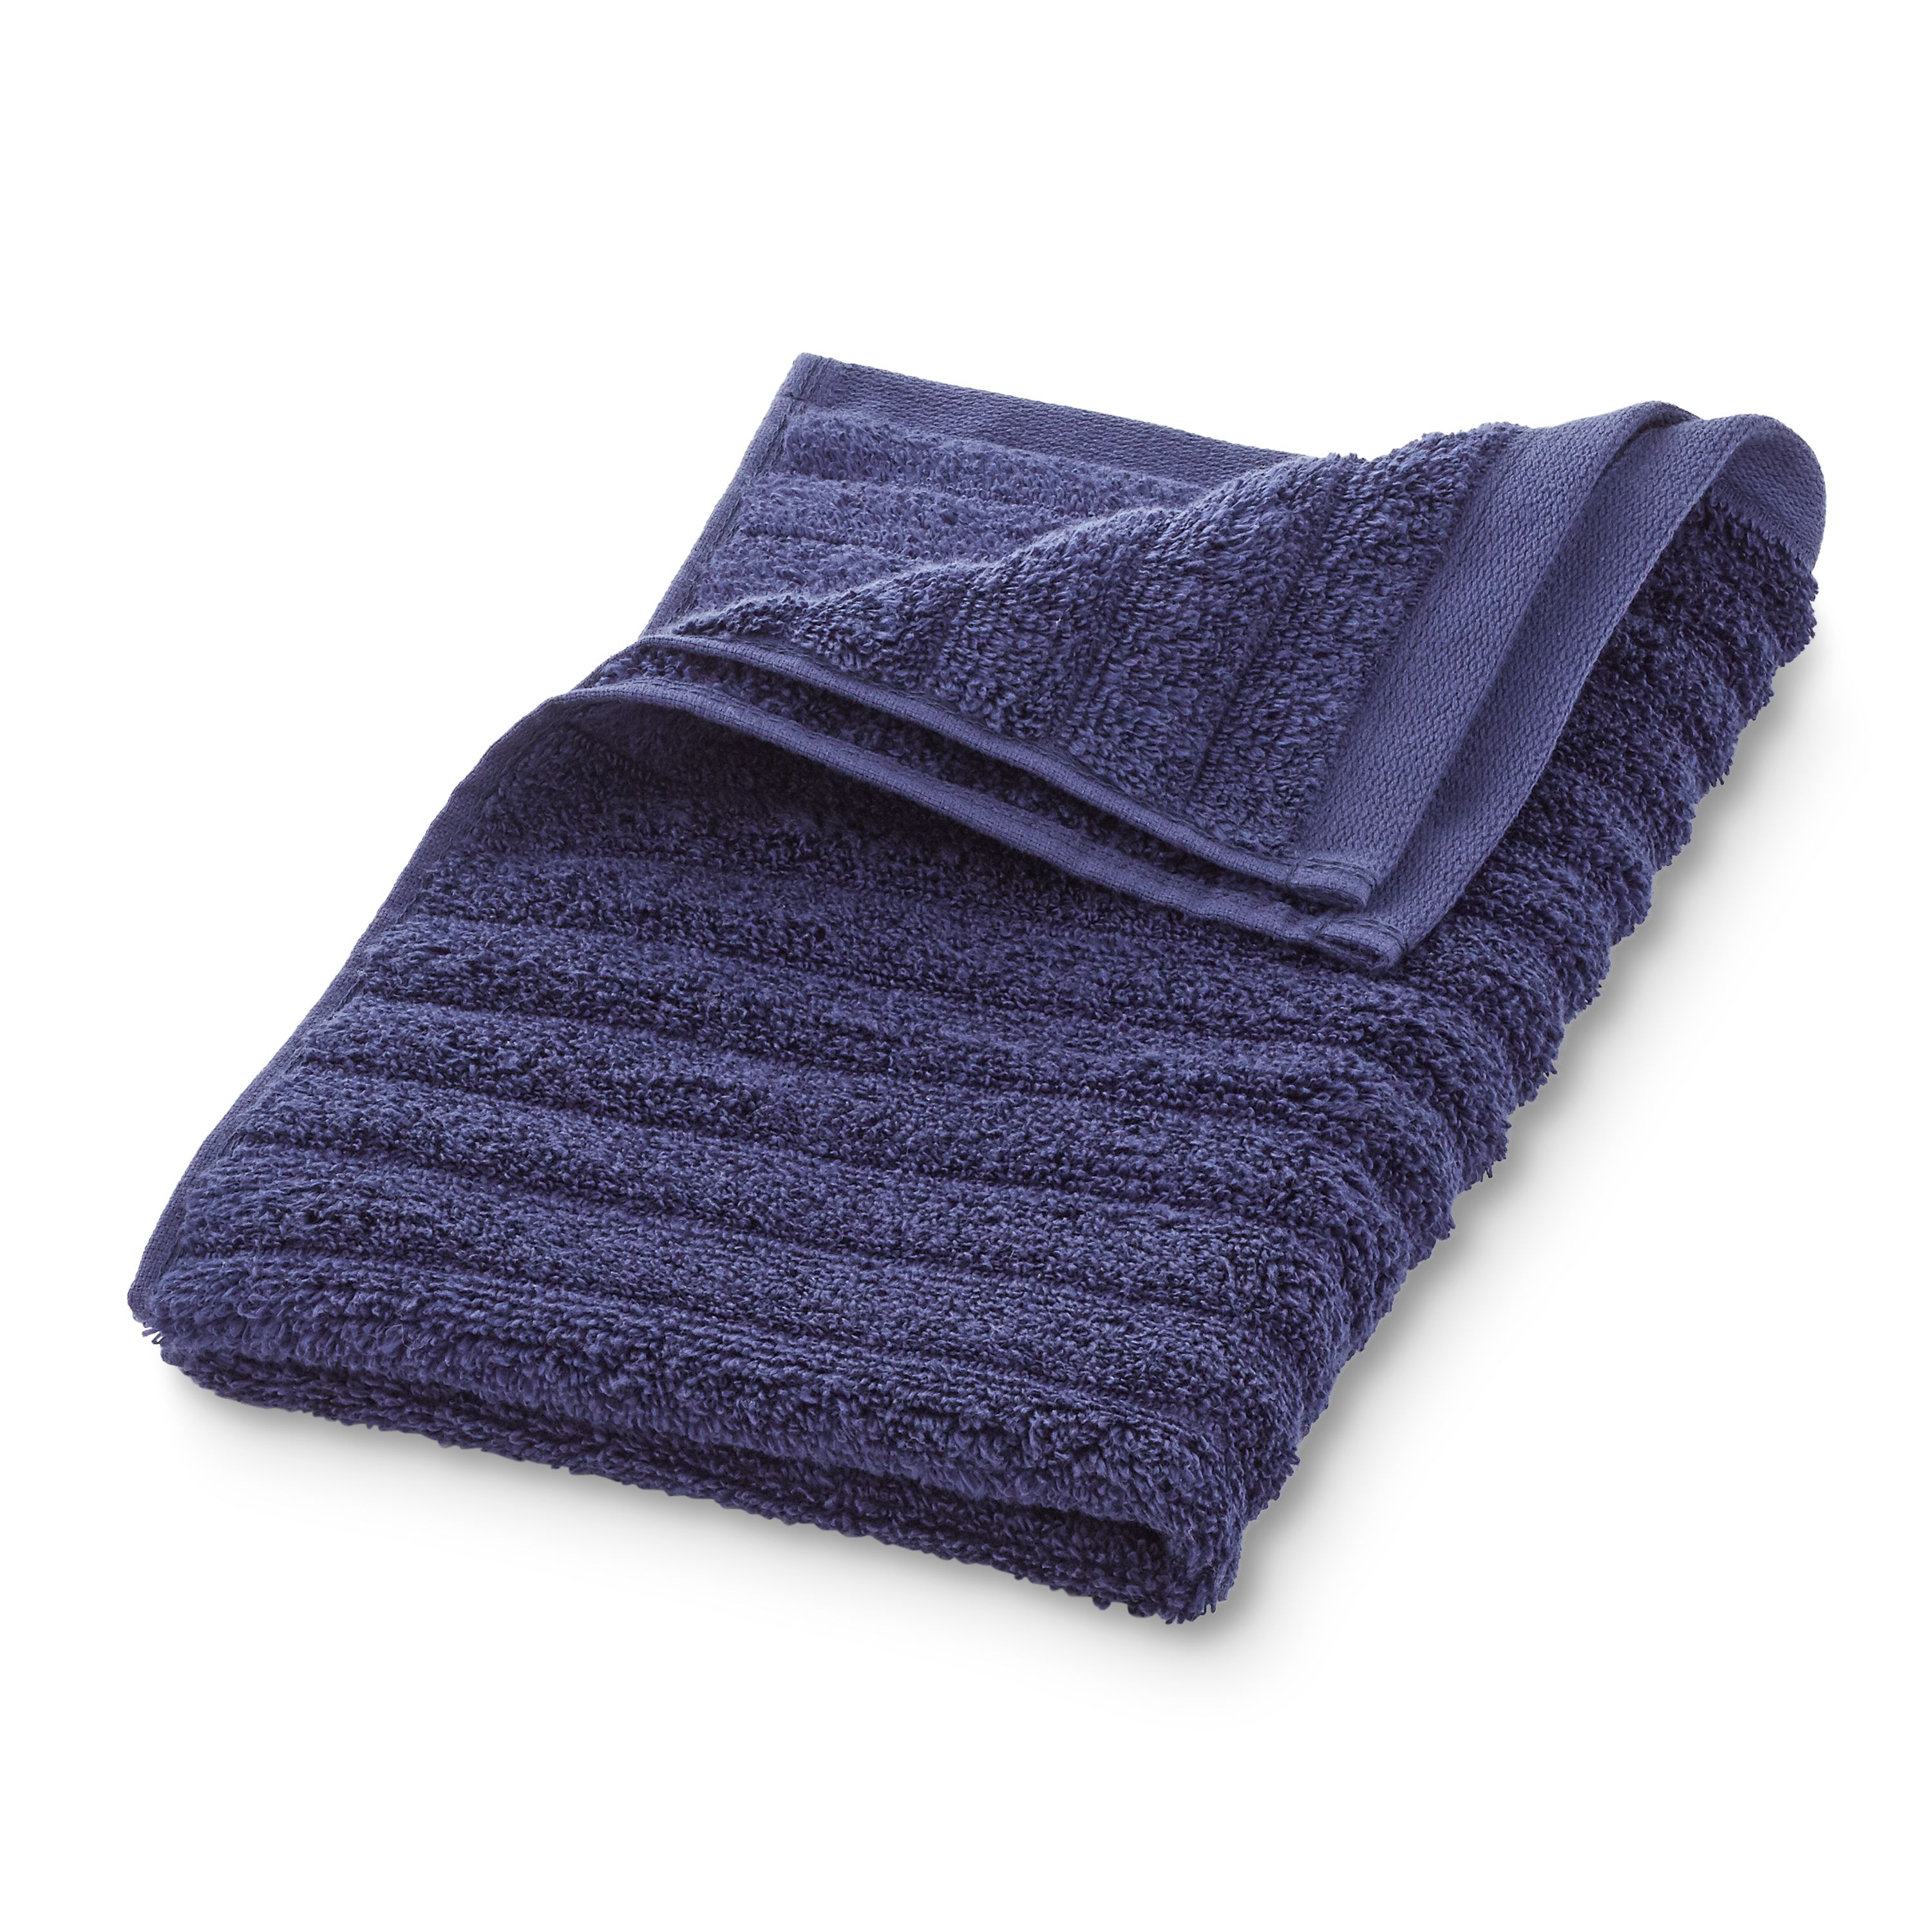 Mainstays Performance Mix Textured 6-Piece Bath Towel Set - Navy Blue - image 7 of 9